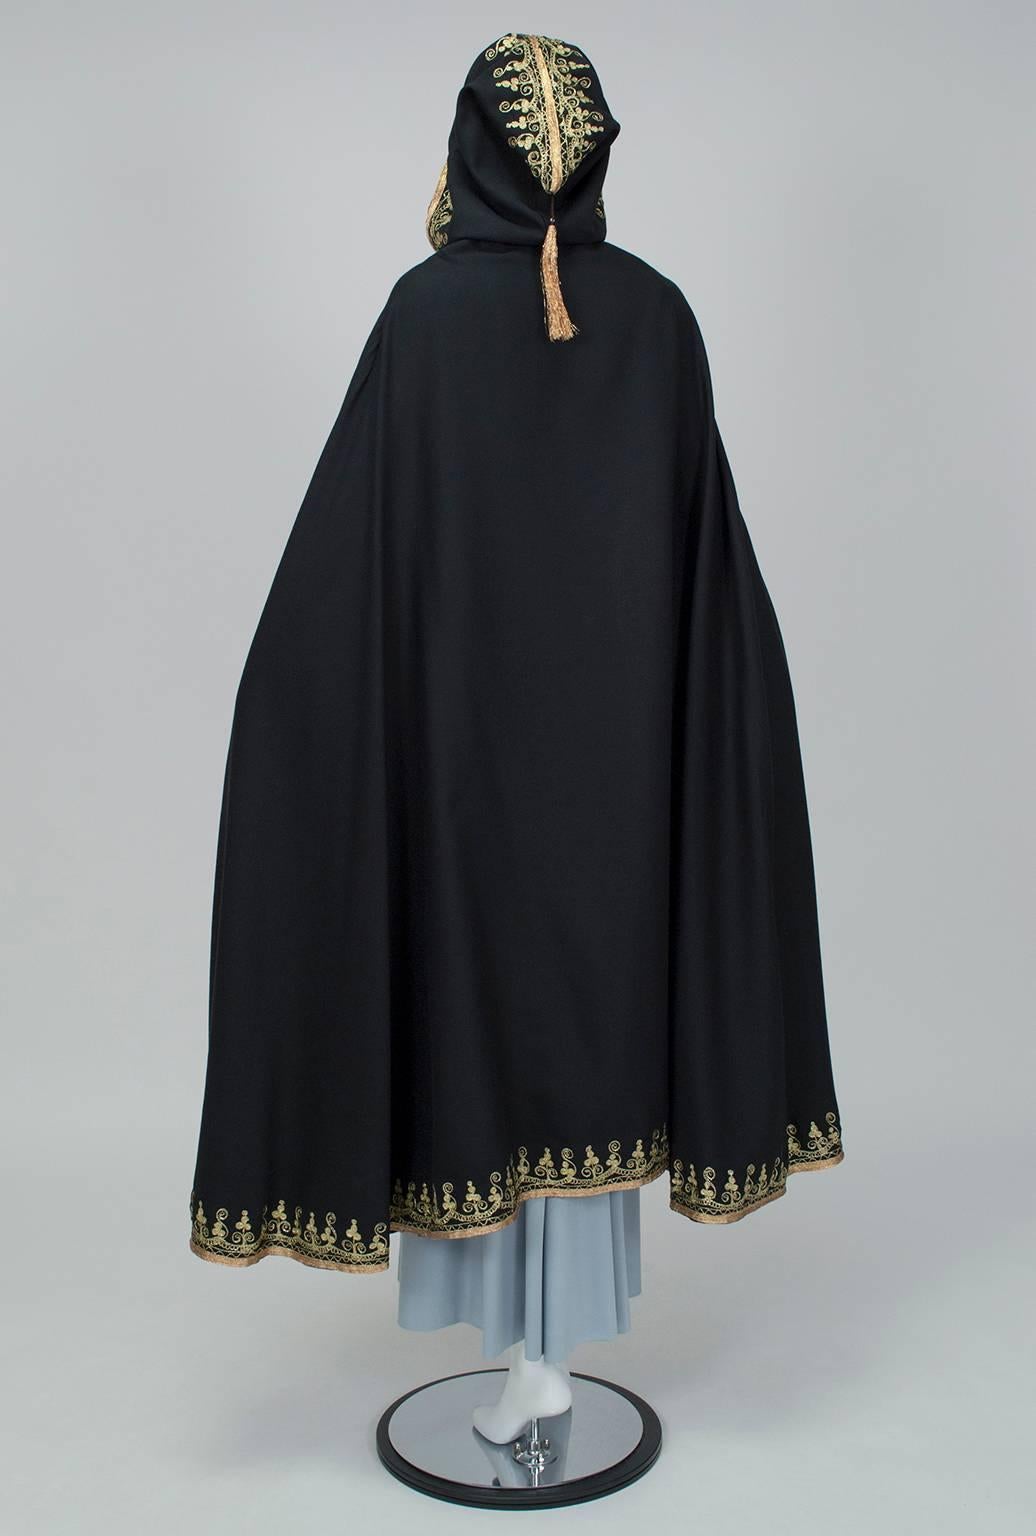 moroccan cloak